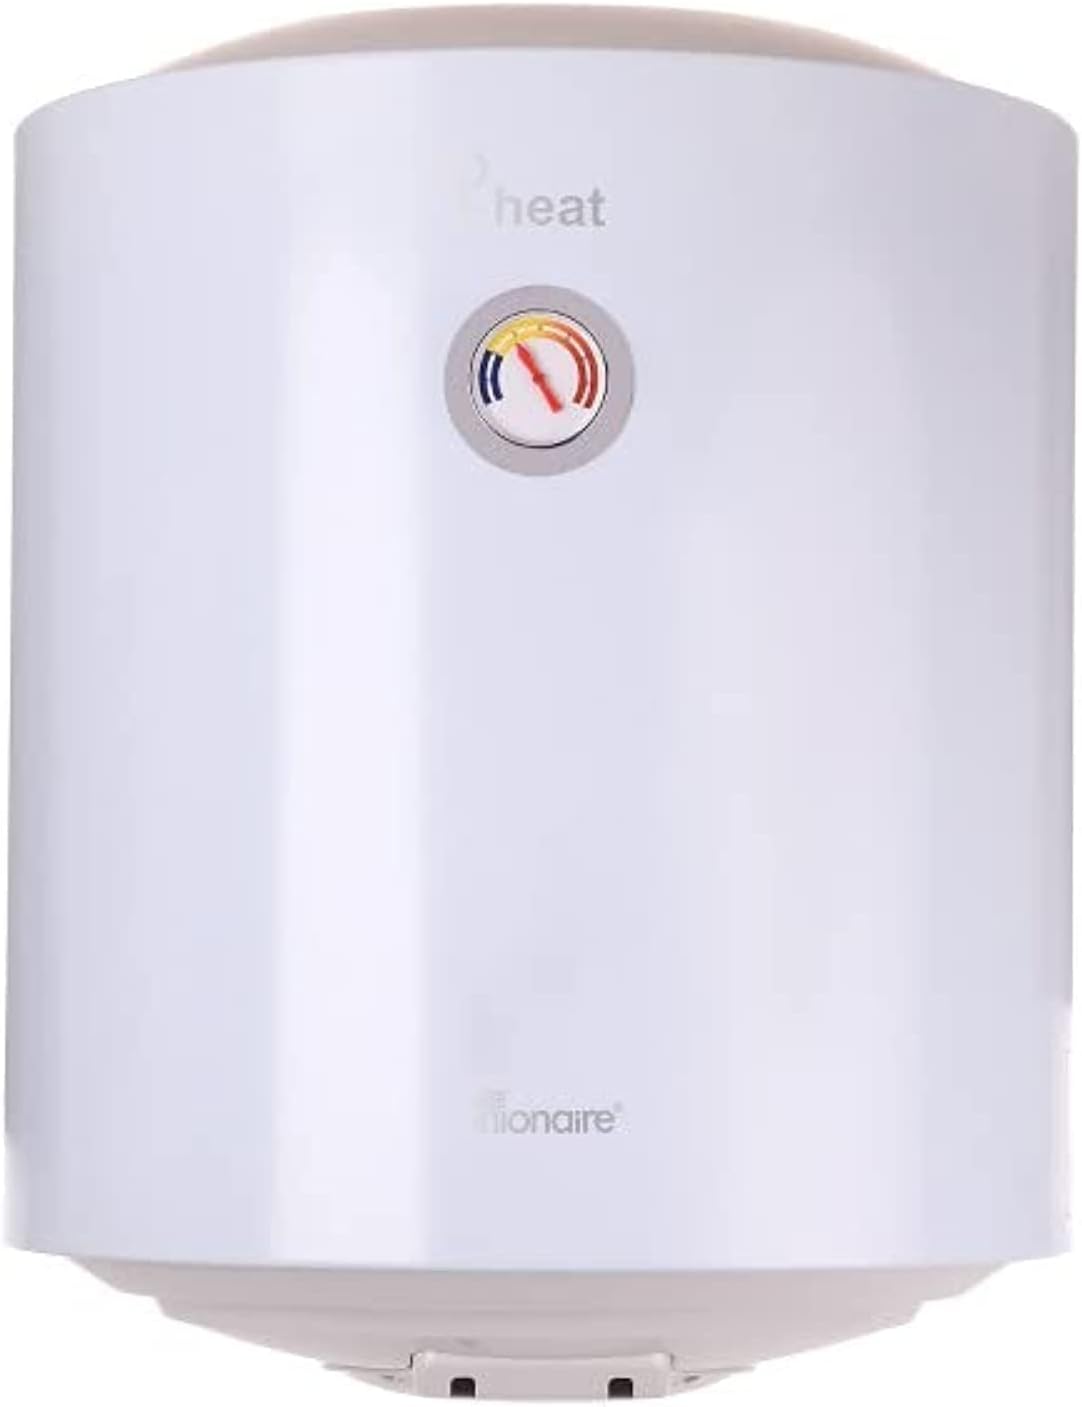 Unionaire i-Heat Electric Water Heater, 45 Litres, White - EWH45C100VP3